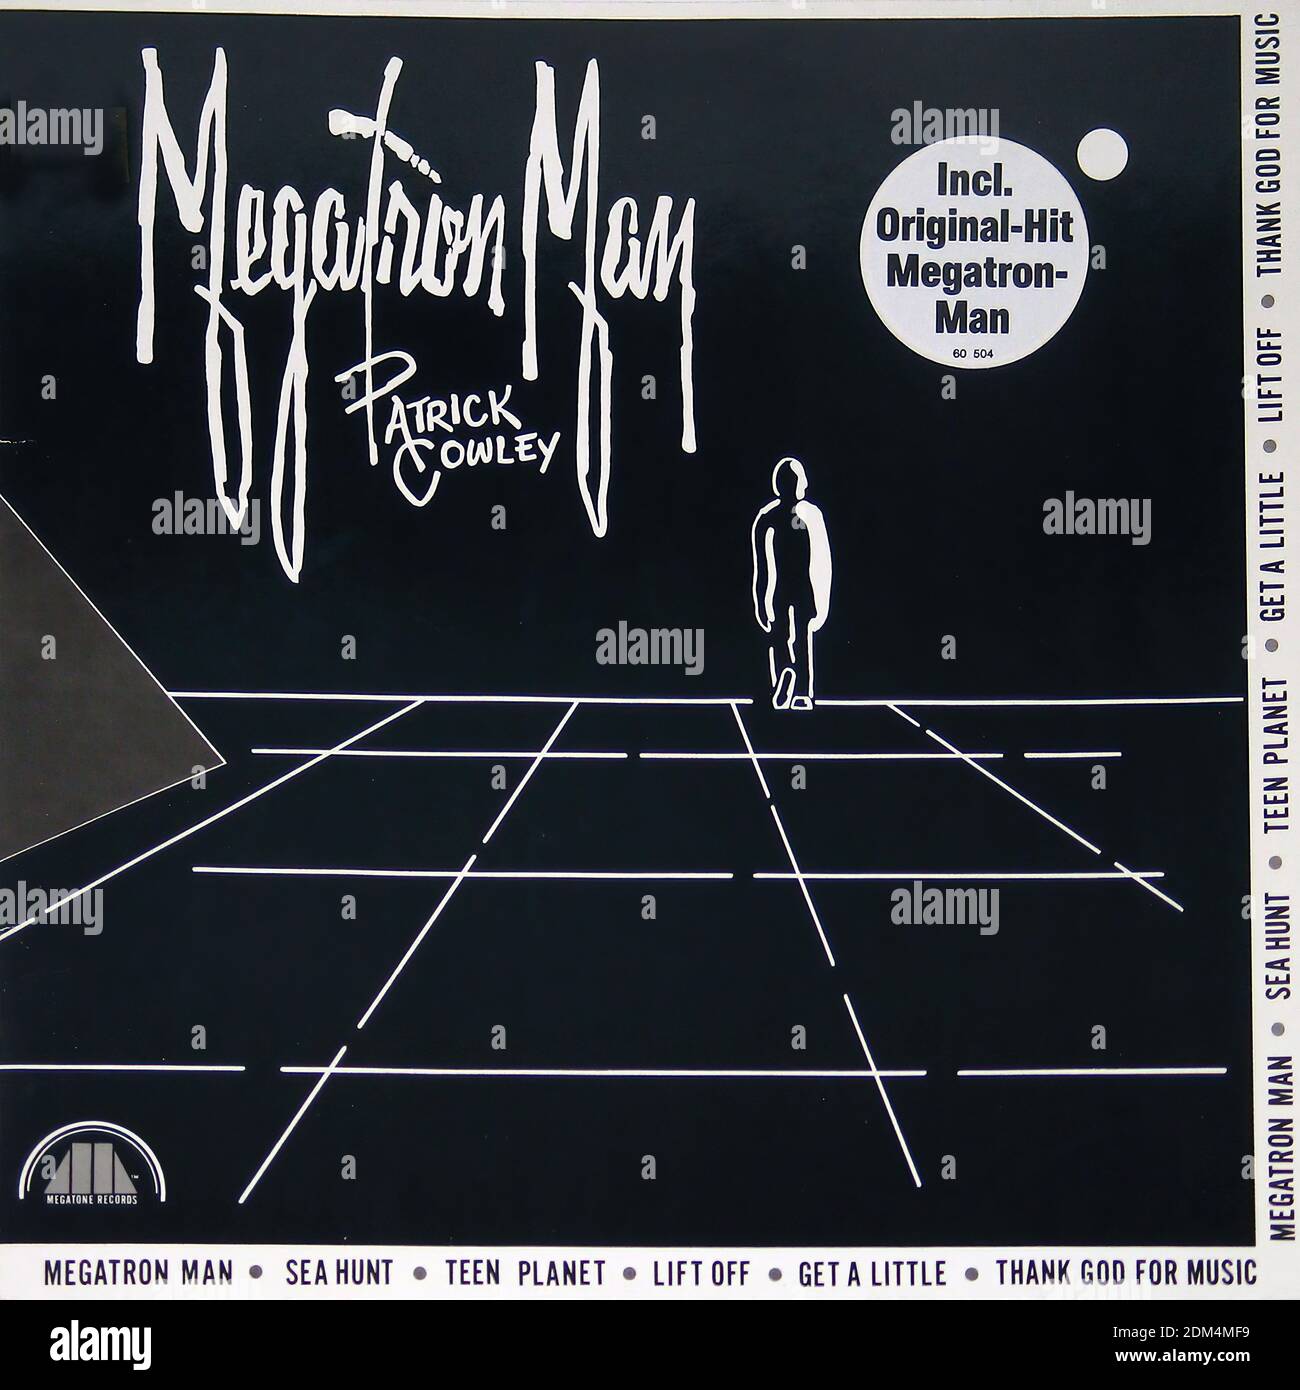 Patrick Cowley Megatron Man  - Vintage Vinyl Record Cover Stock Photo